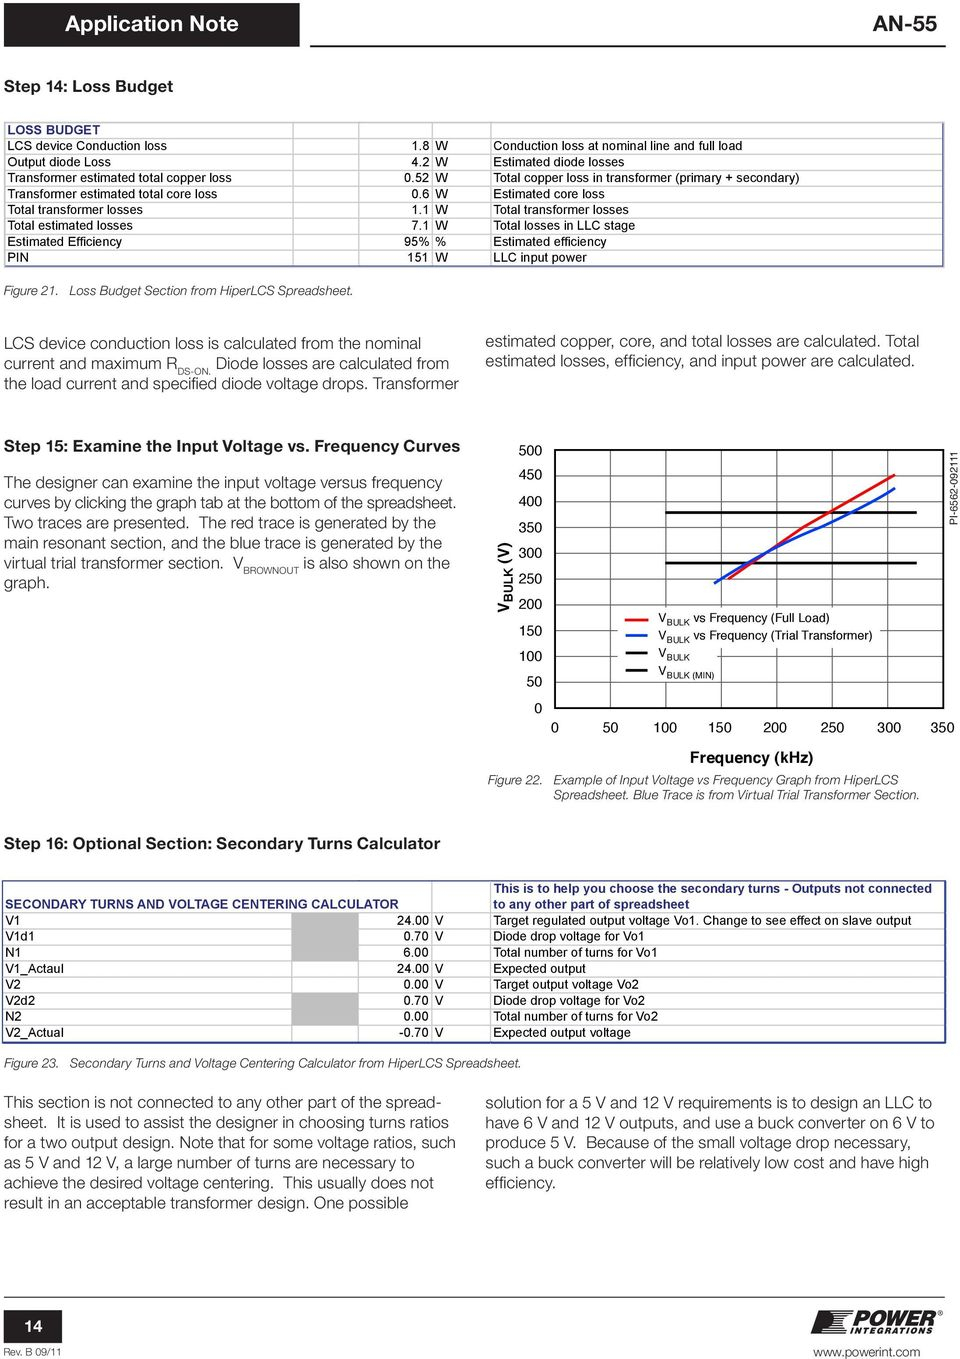 Transformer Design Spreadsheet For Application Note An55 Hiperlcs Family  Pdf